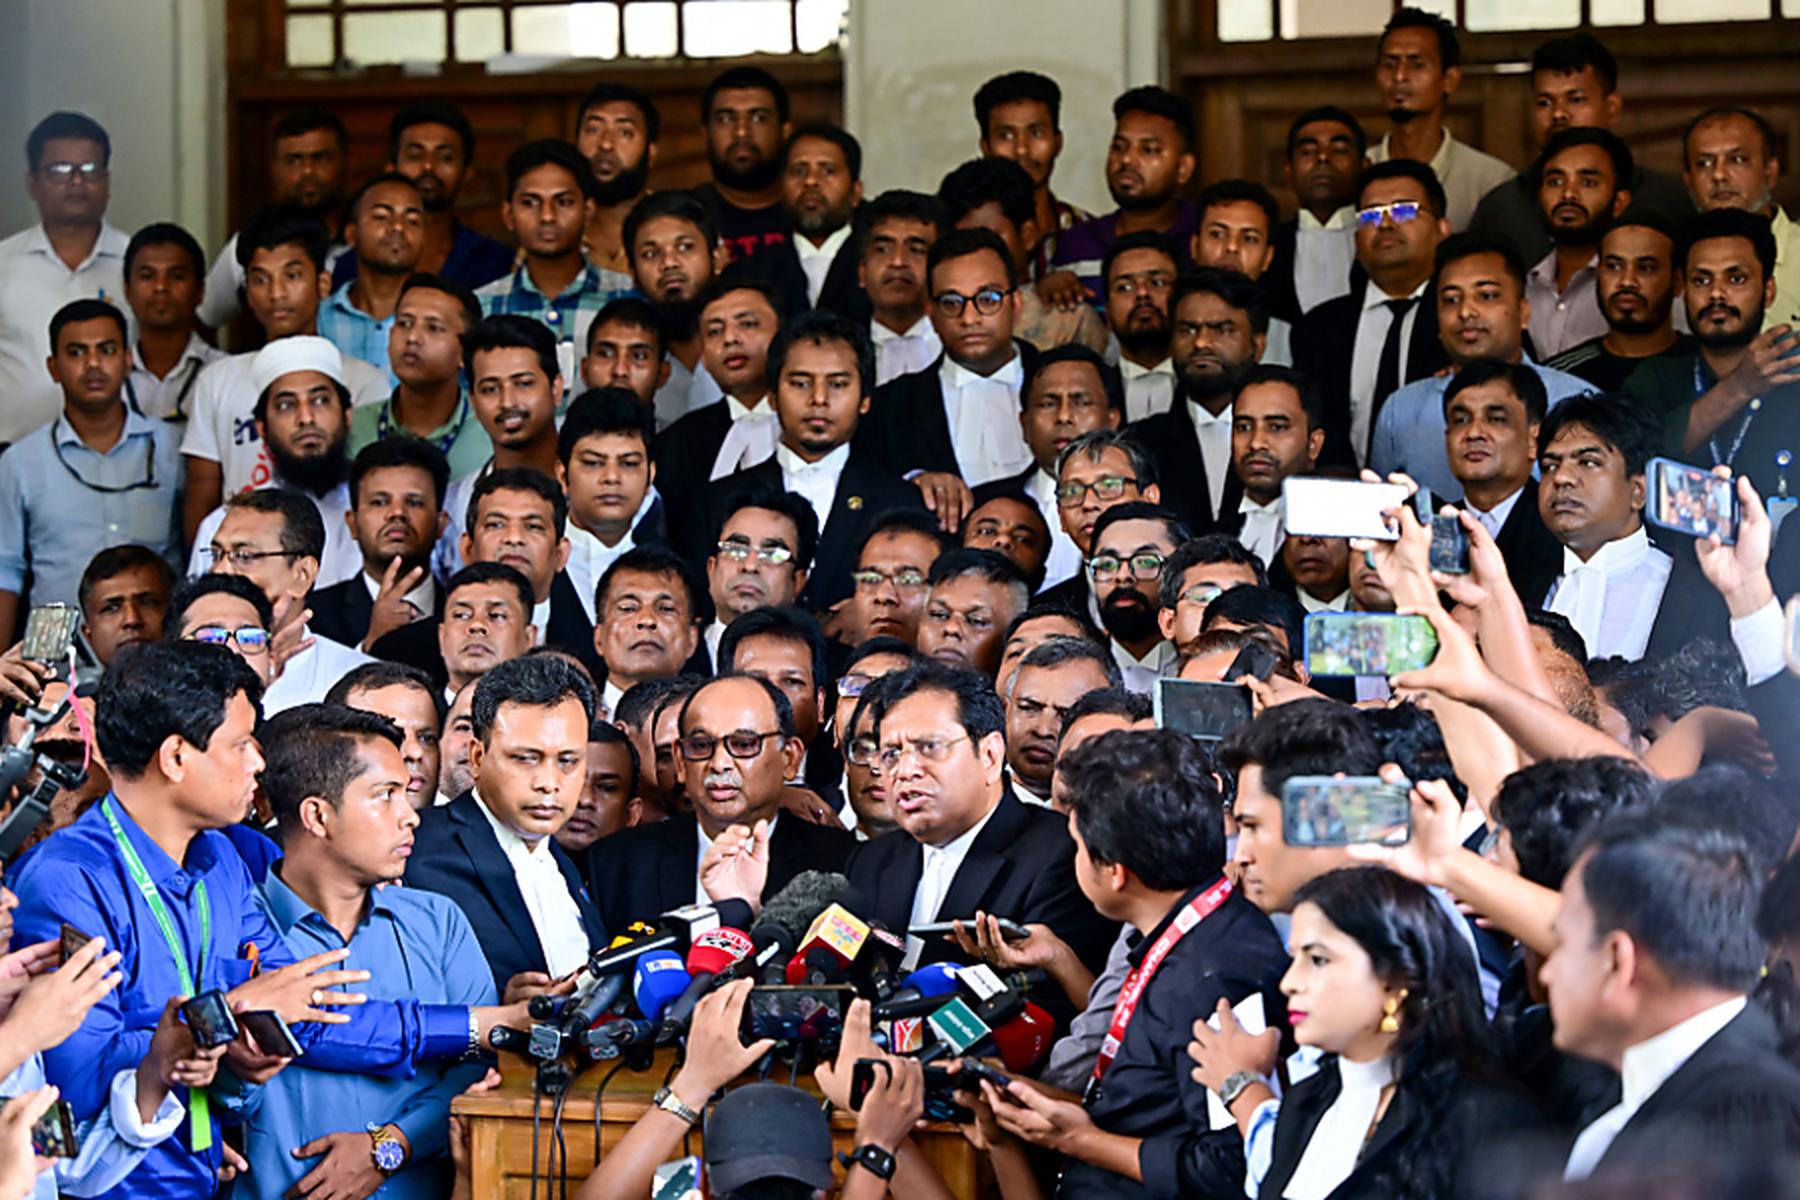 Dhaka: Proteste in Bangladesch: Gericht dreht Quotenregelung zurück